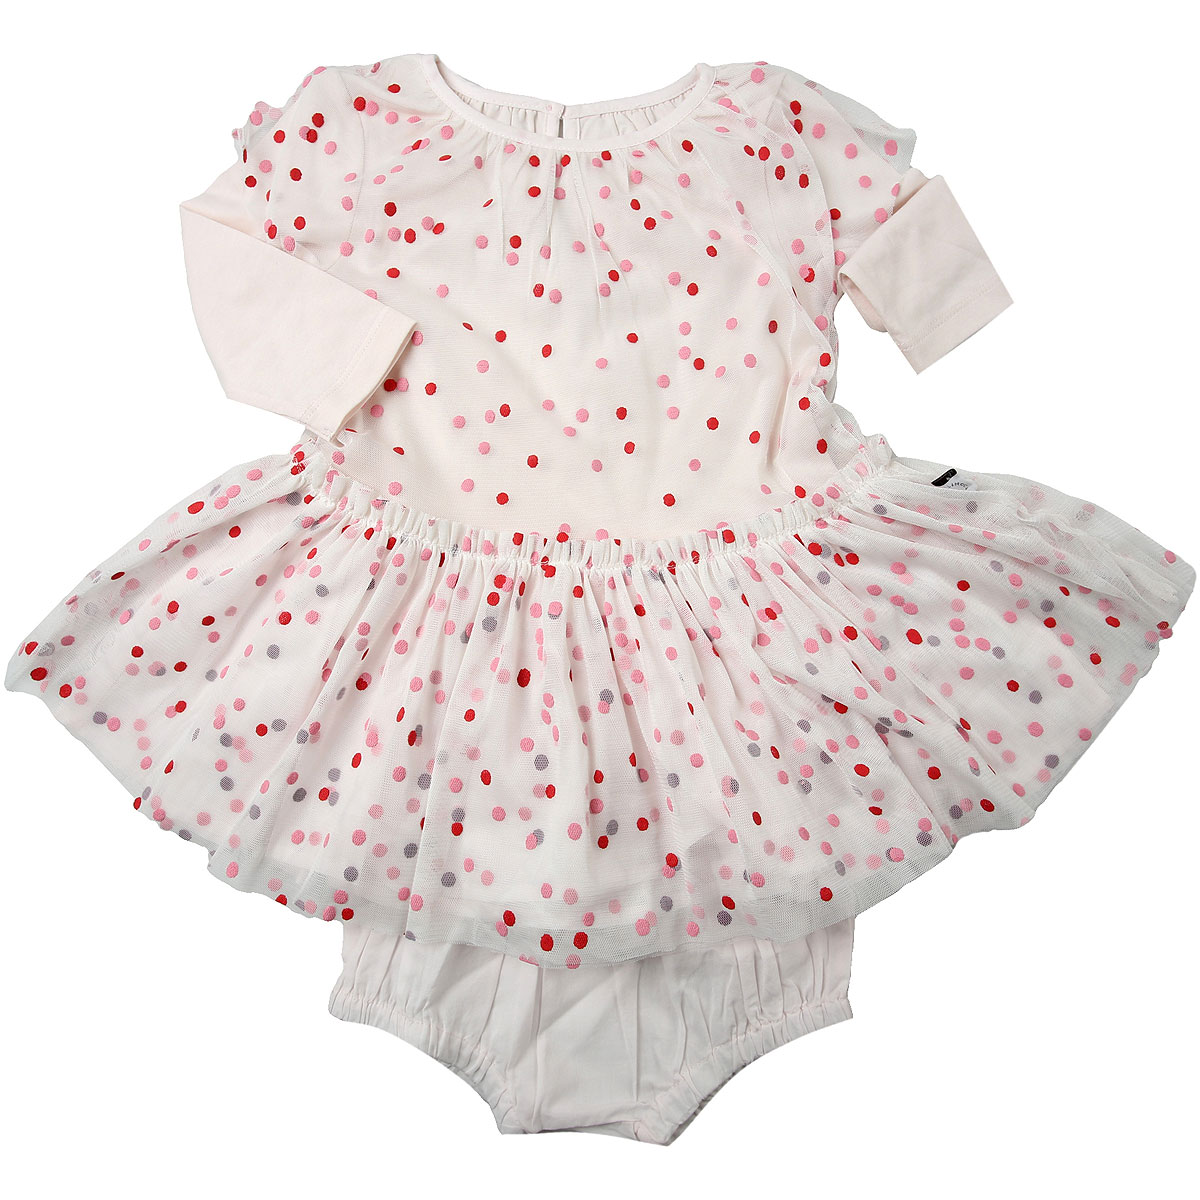 Baby Girl Clothing Stella McCartney, Style code: 601462-spk50-g928